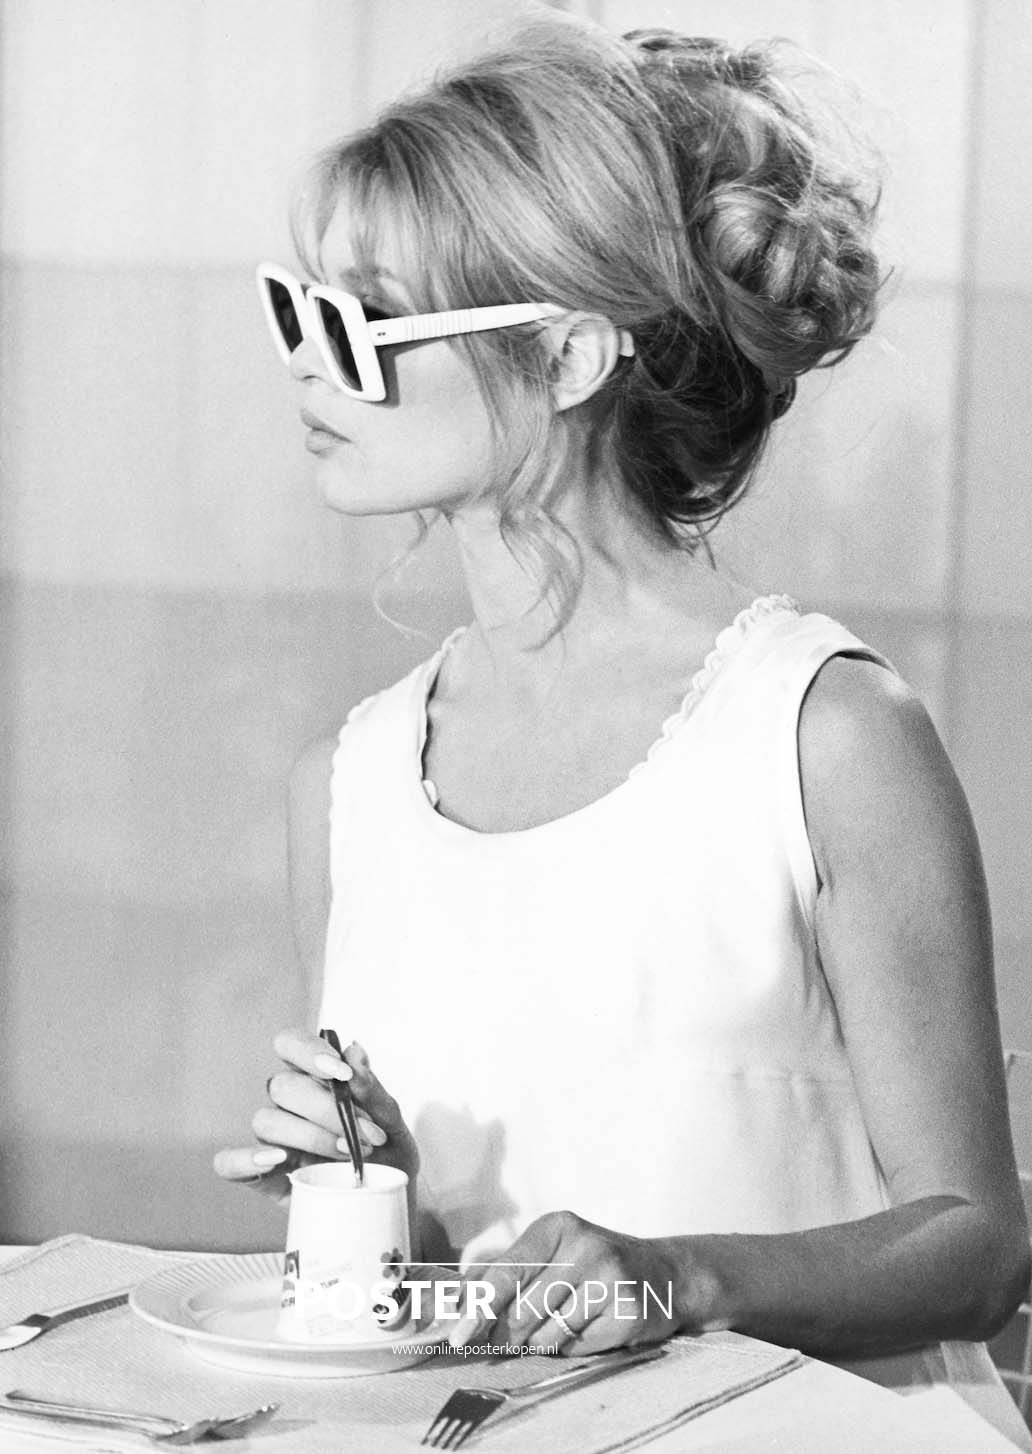 Wonderlijk Poster Brigitte Bardot - Filmster poster - Zwart wit poster Filmster RM-85